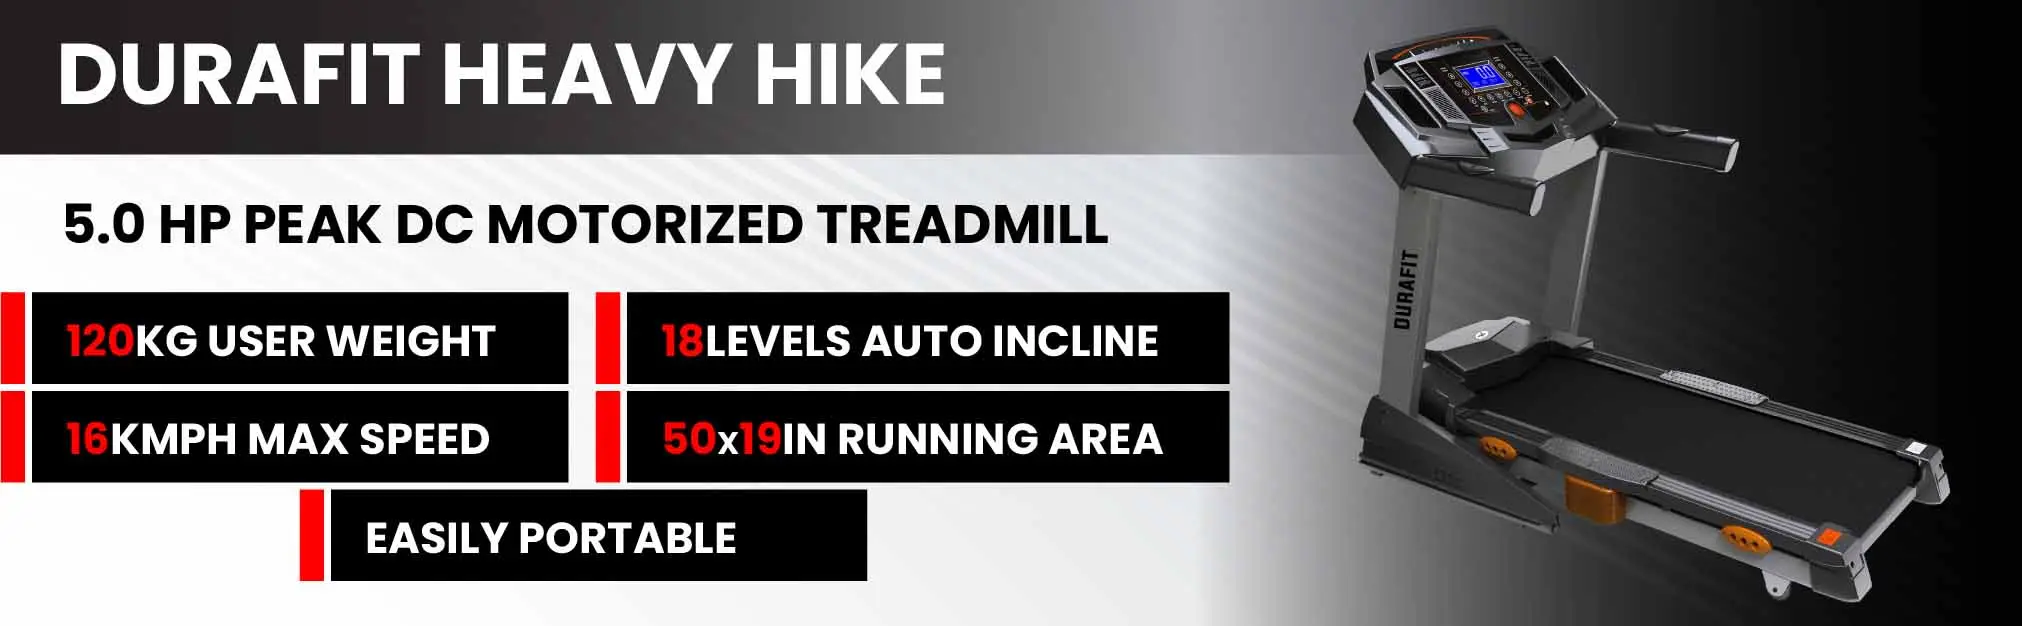 Durafit Heavy hike Treadmill